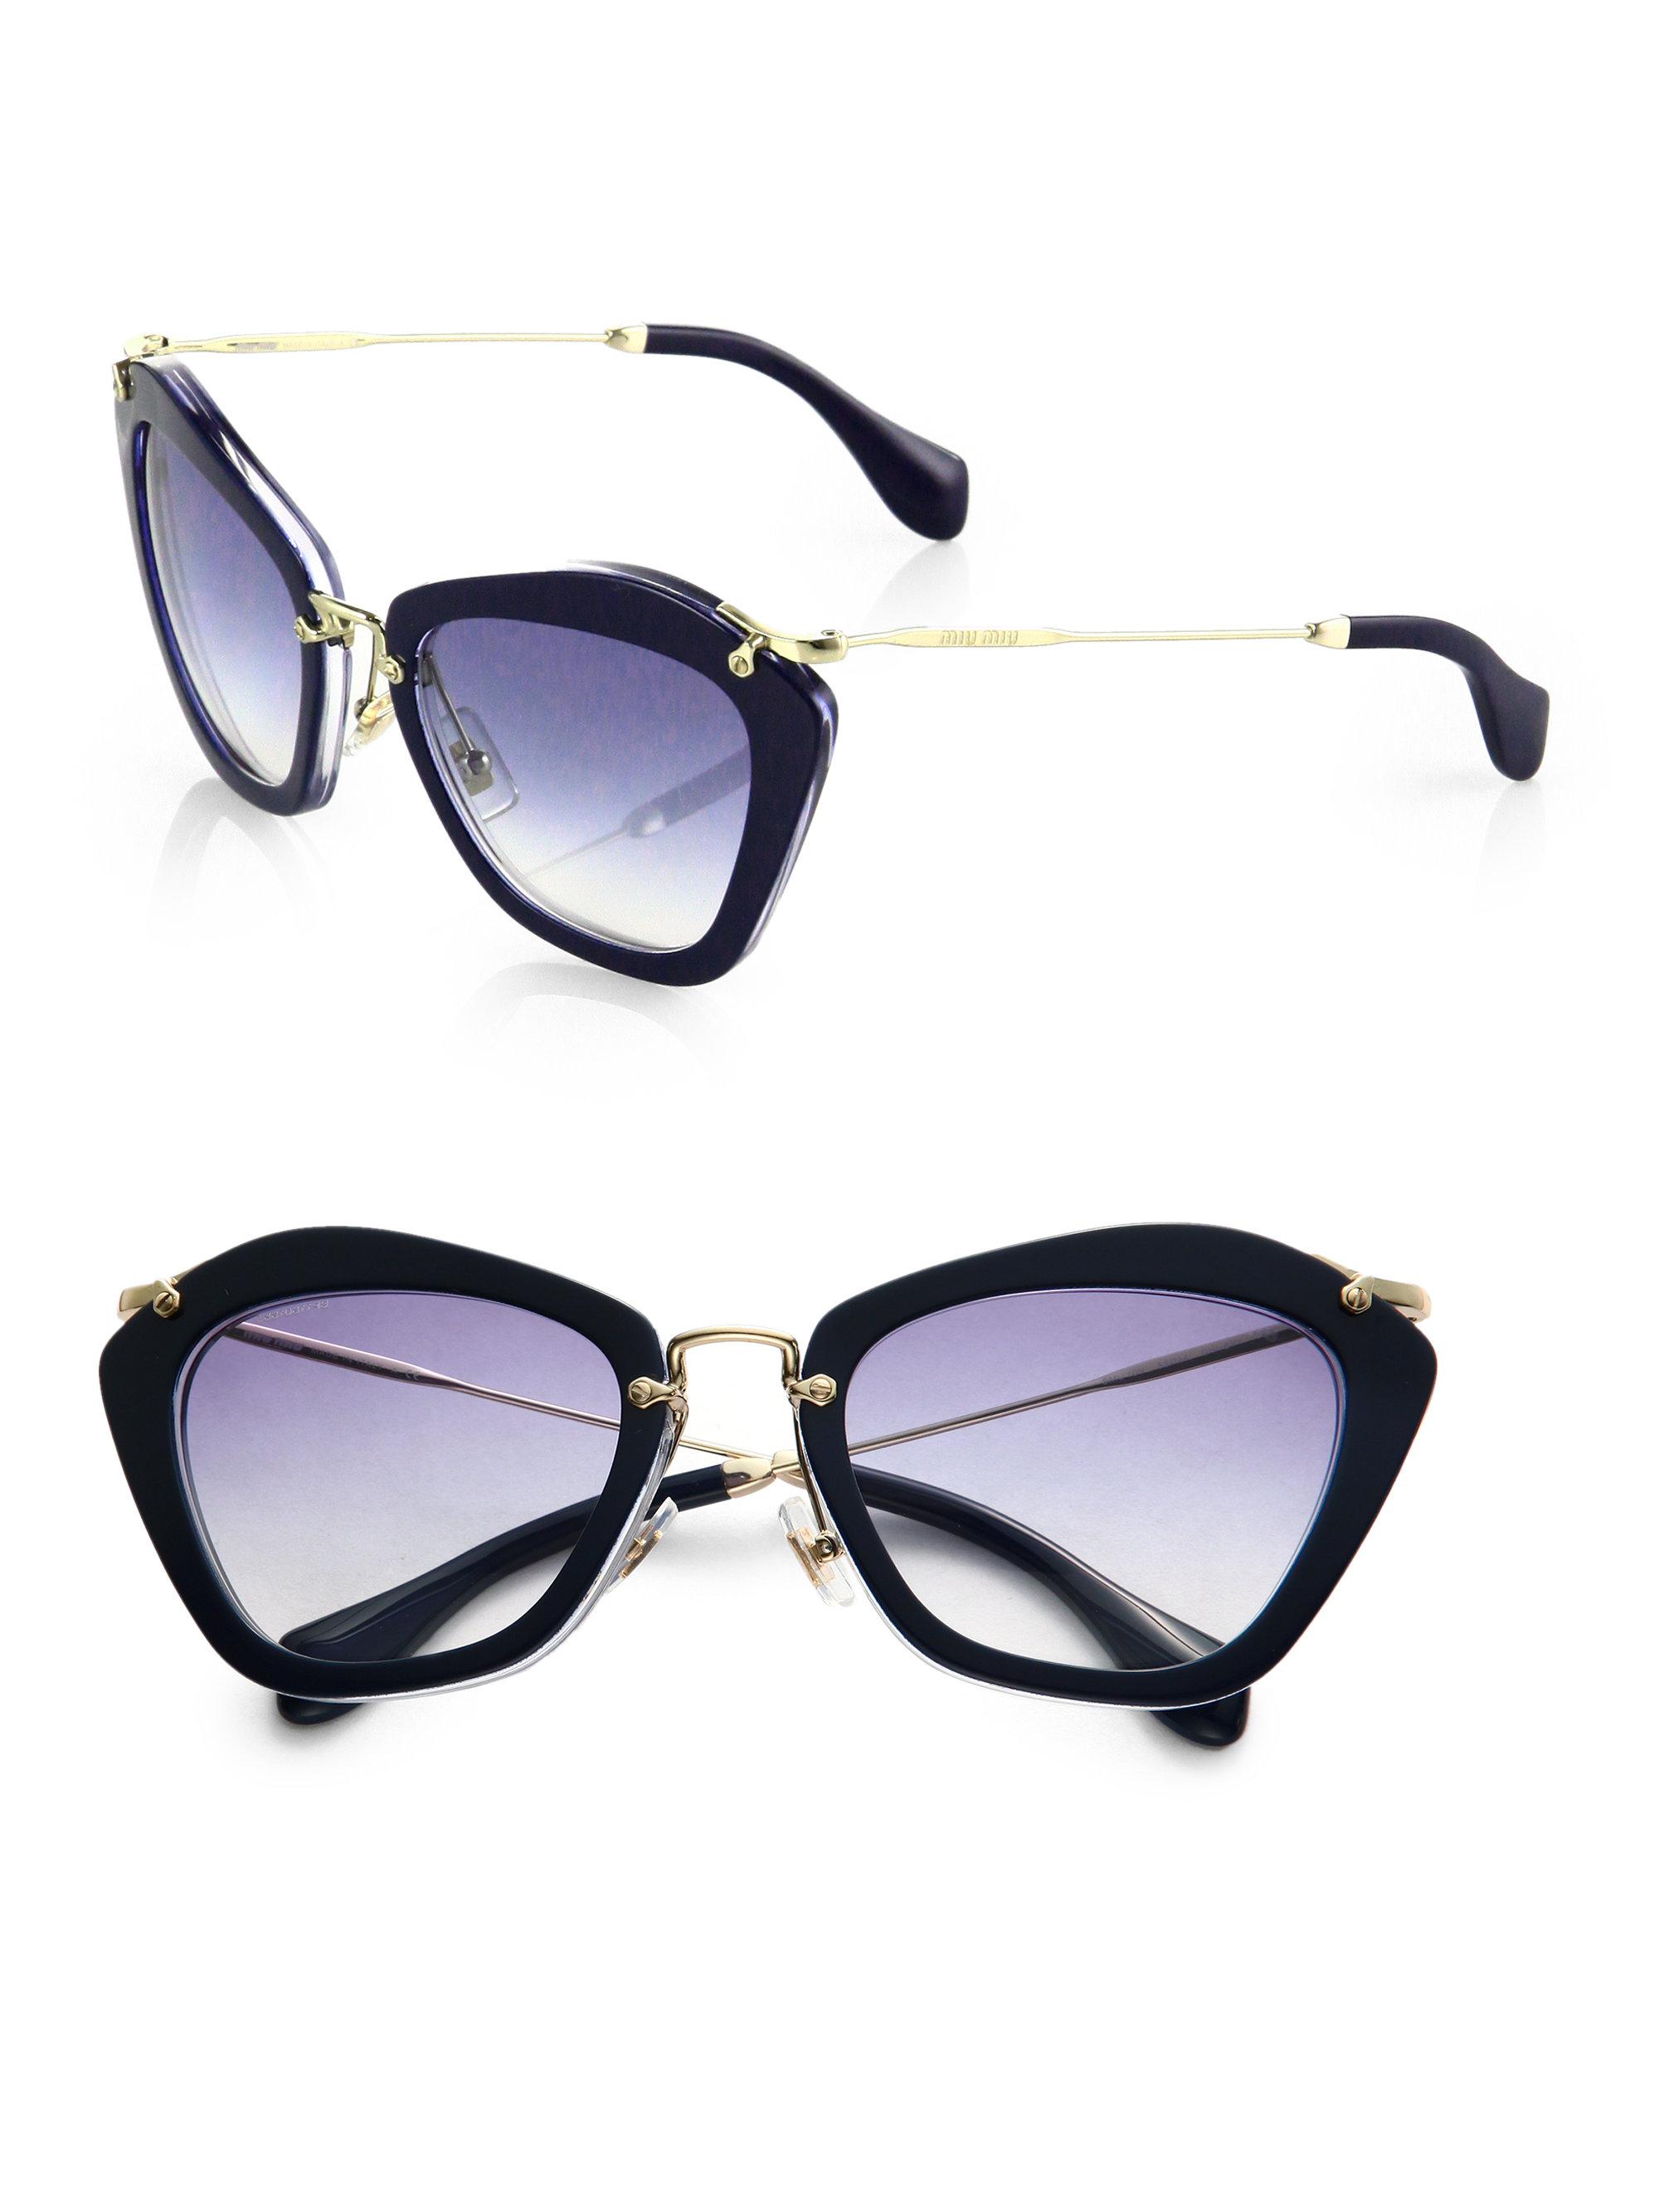 Lyst - Miu Miu Plastic & Metal Cat's-eye Sunglasses in Blue